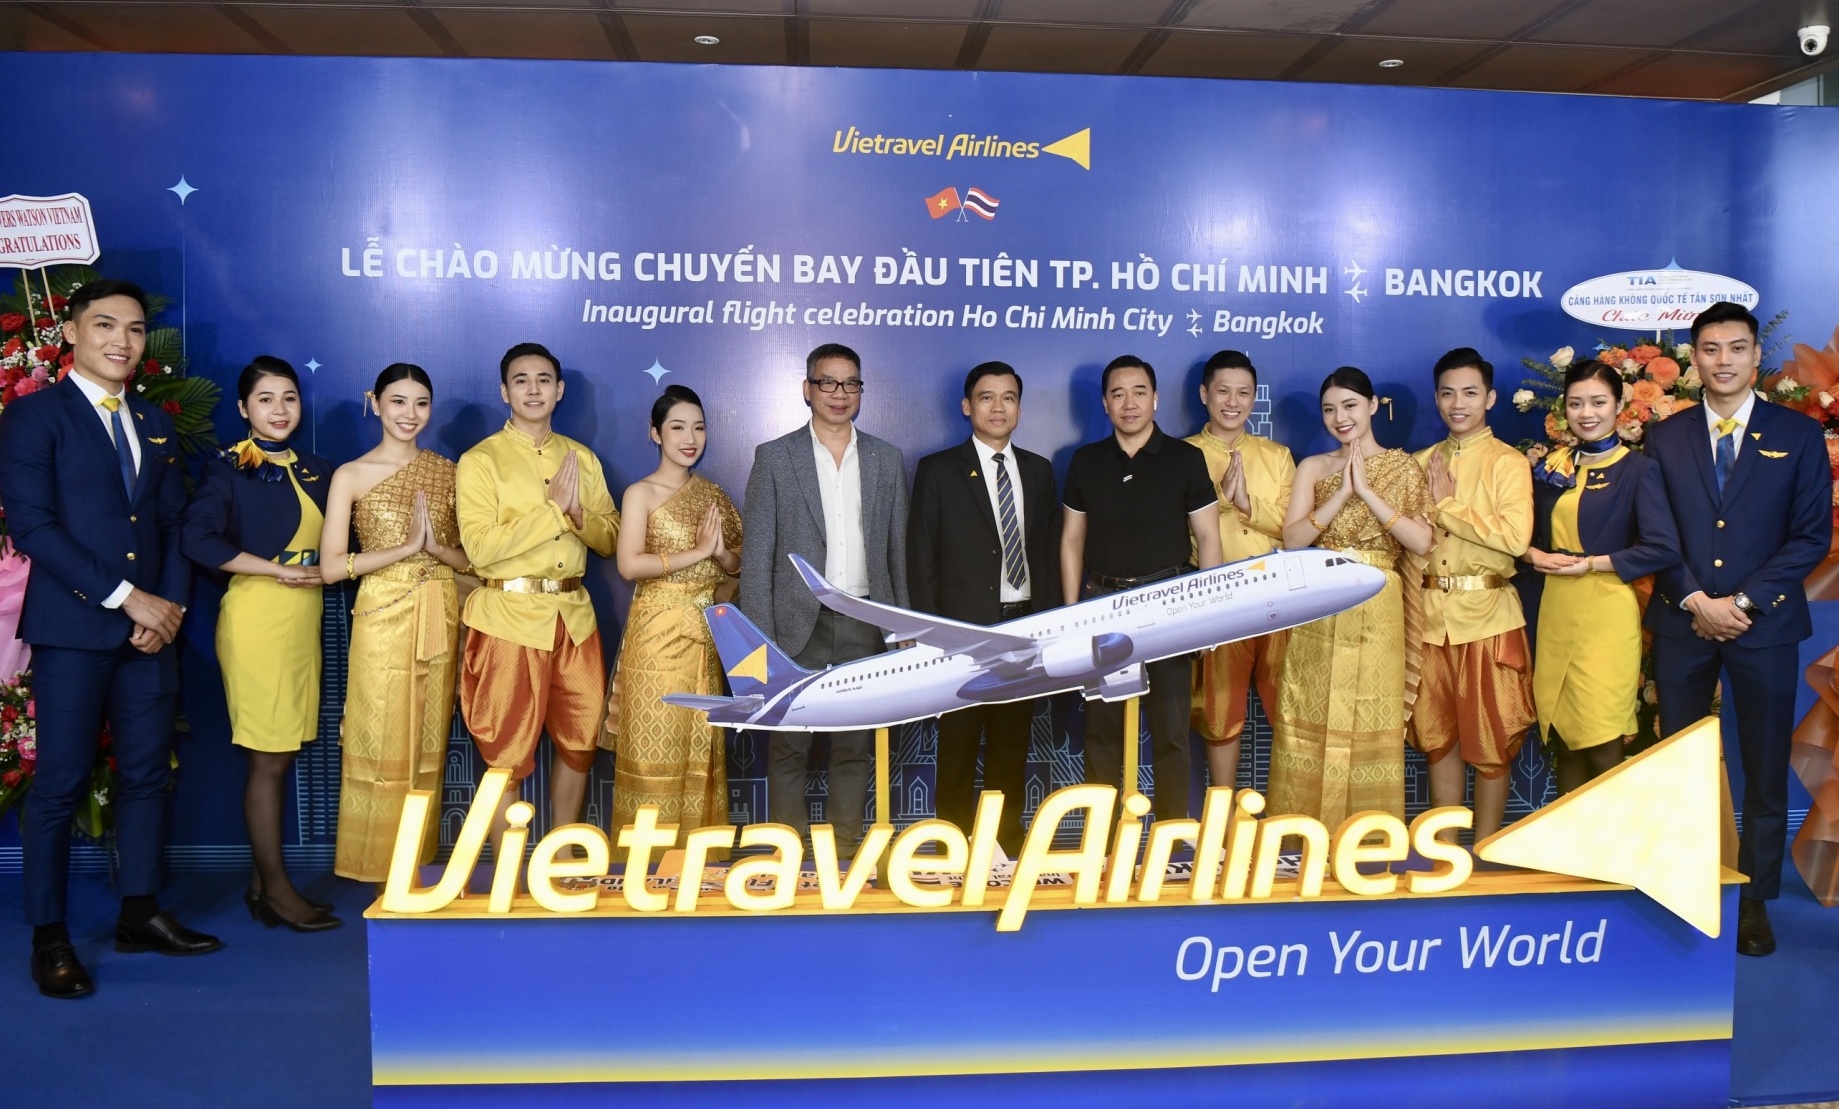 Vietravel Airlines officially adds Ho Chi Minh City-Bangkok flight